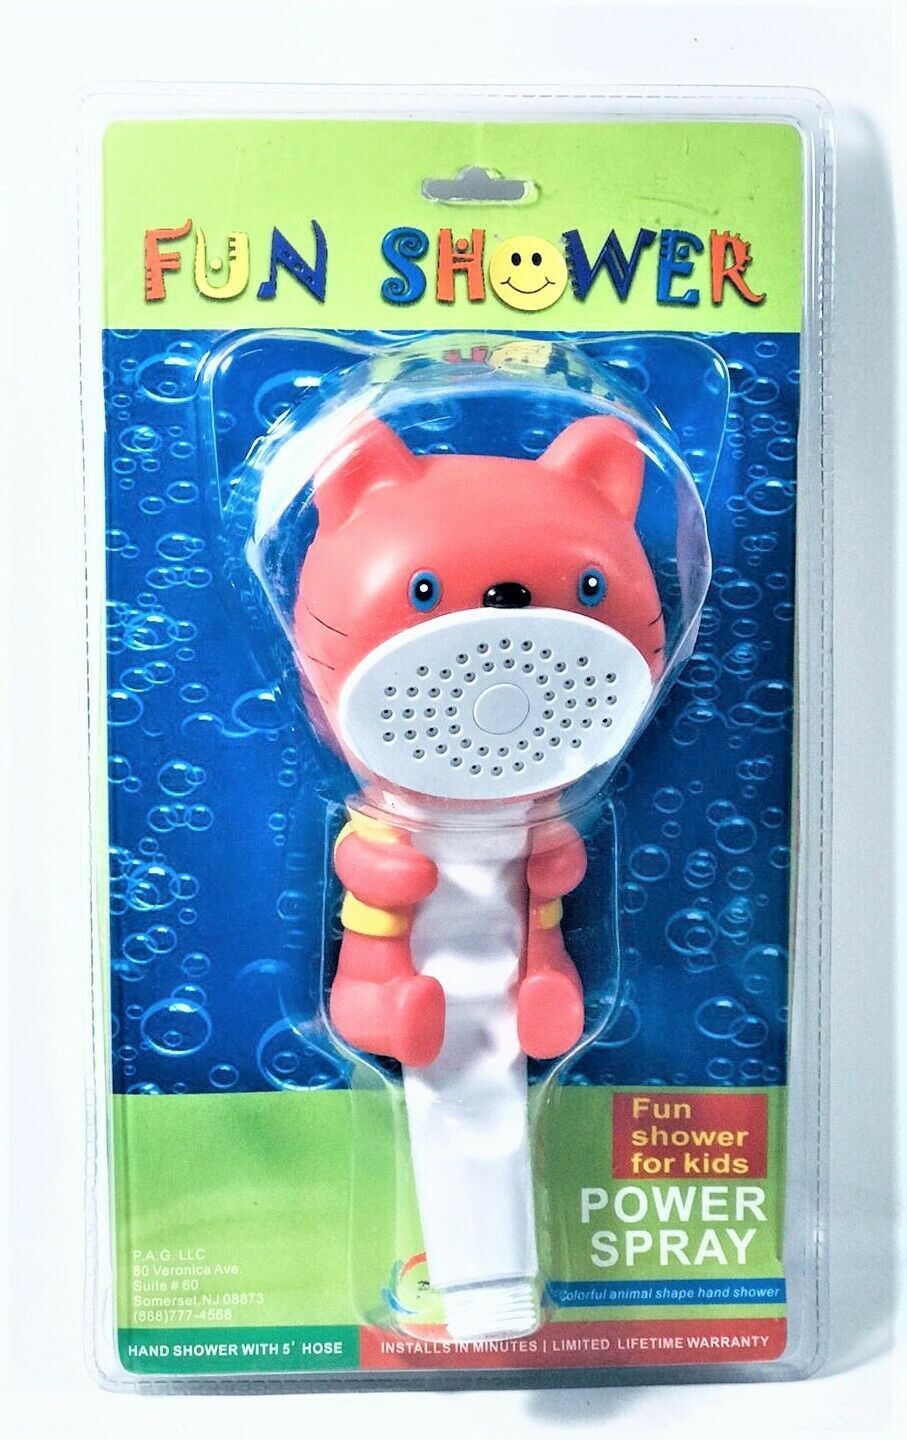 Fun shower power spray for kids-red cat